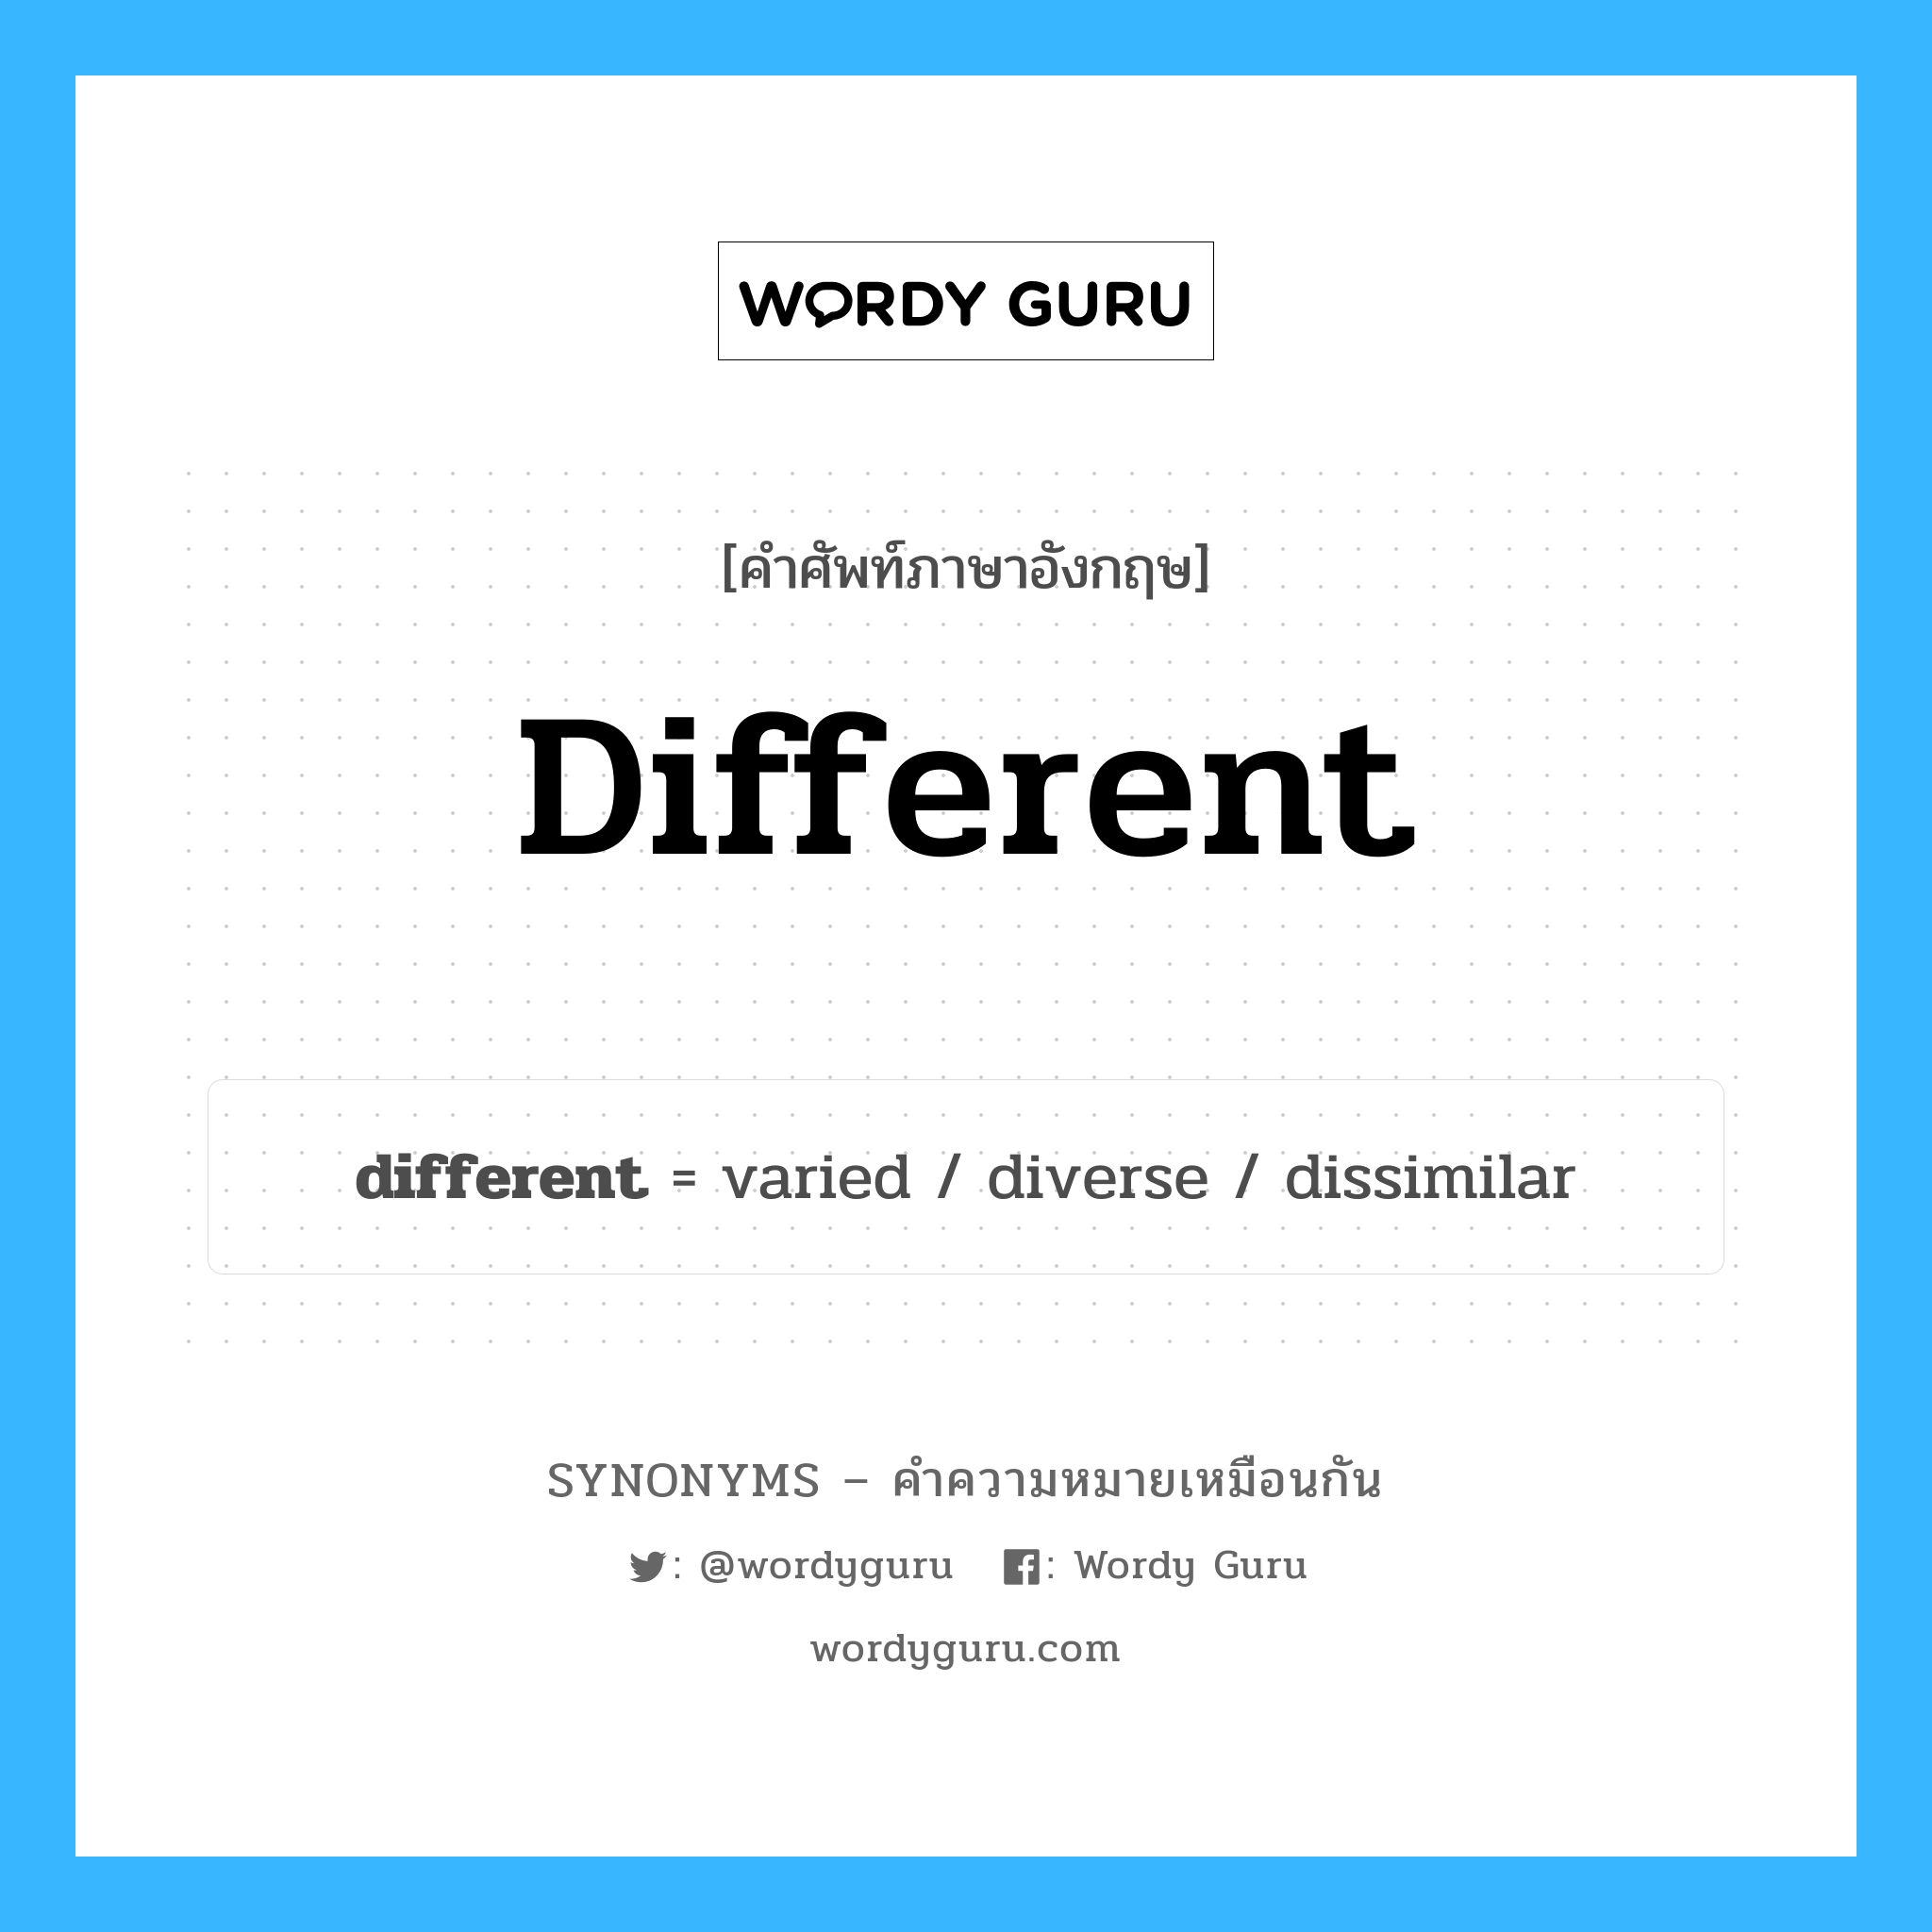 diverse เป็นหนึ่งใน different และมีคำอื่น ๆ อีกดังนี้, คำศัพท์ภาษาอังกฤษ diverse ความหมายคล้ายกันกับ different แปลว่า มีความหลากหลาย หมวด different